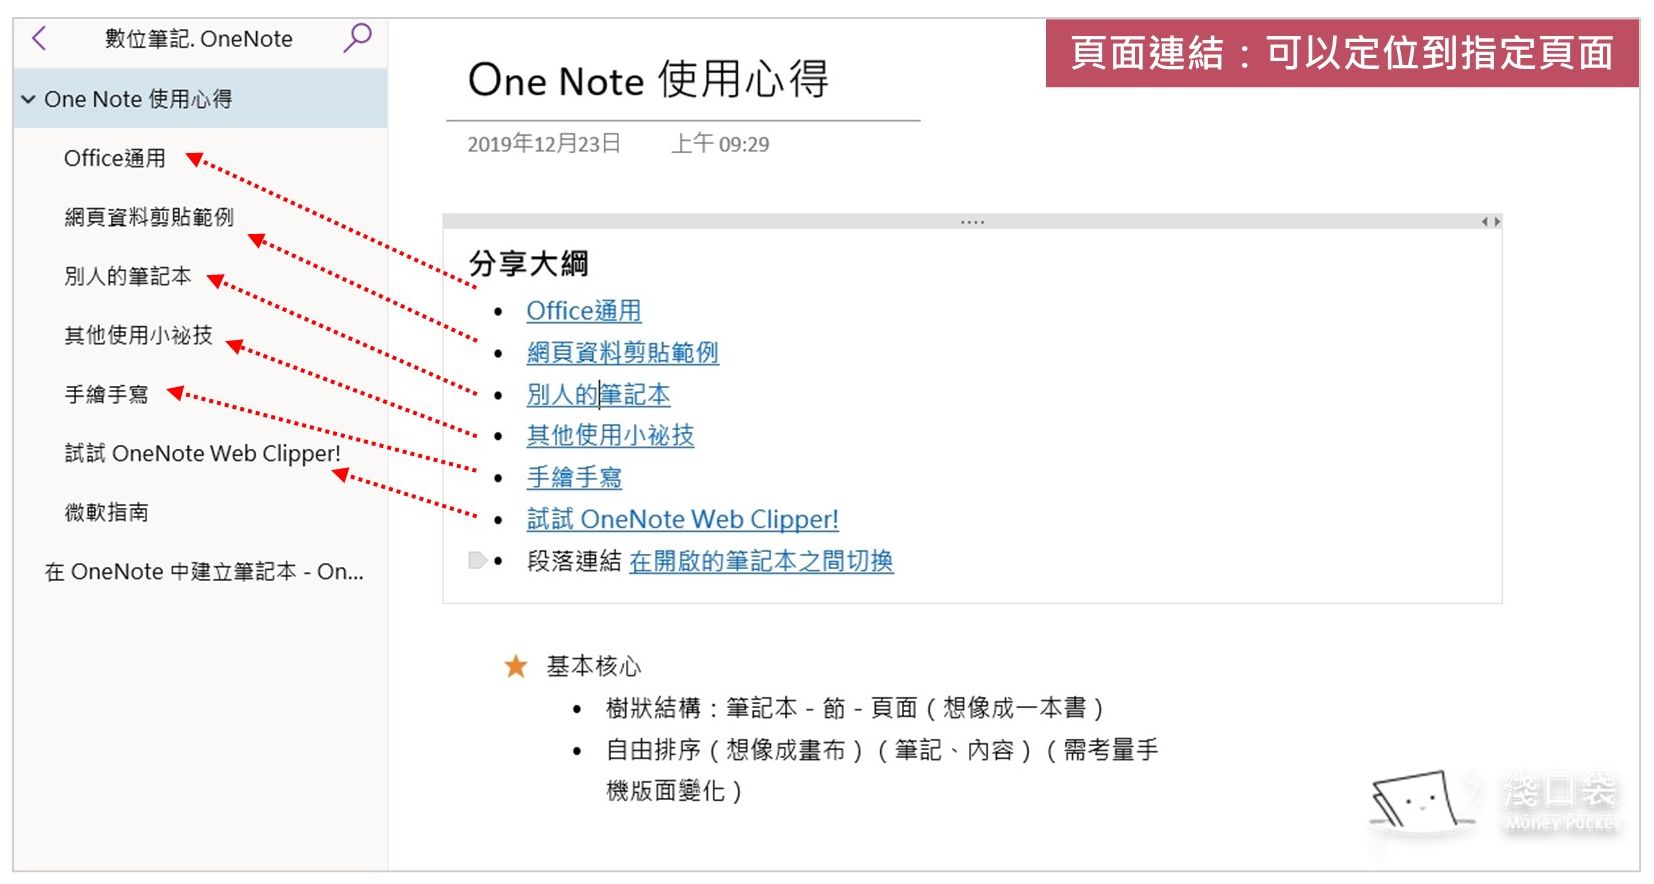 OneNote可以記錄每個頁面的超連結